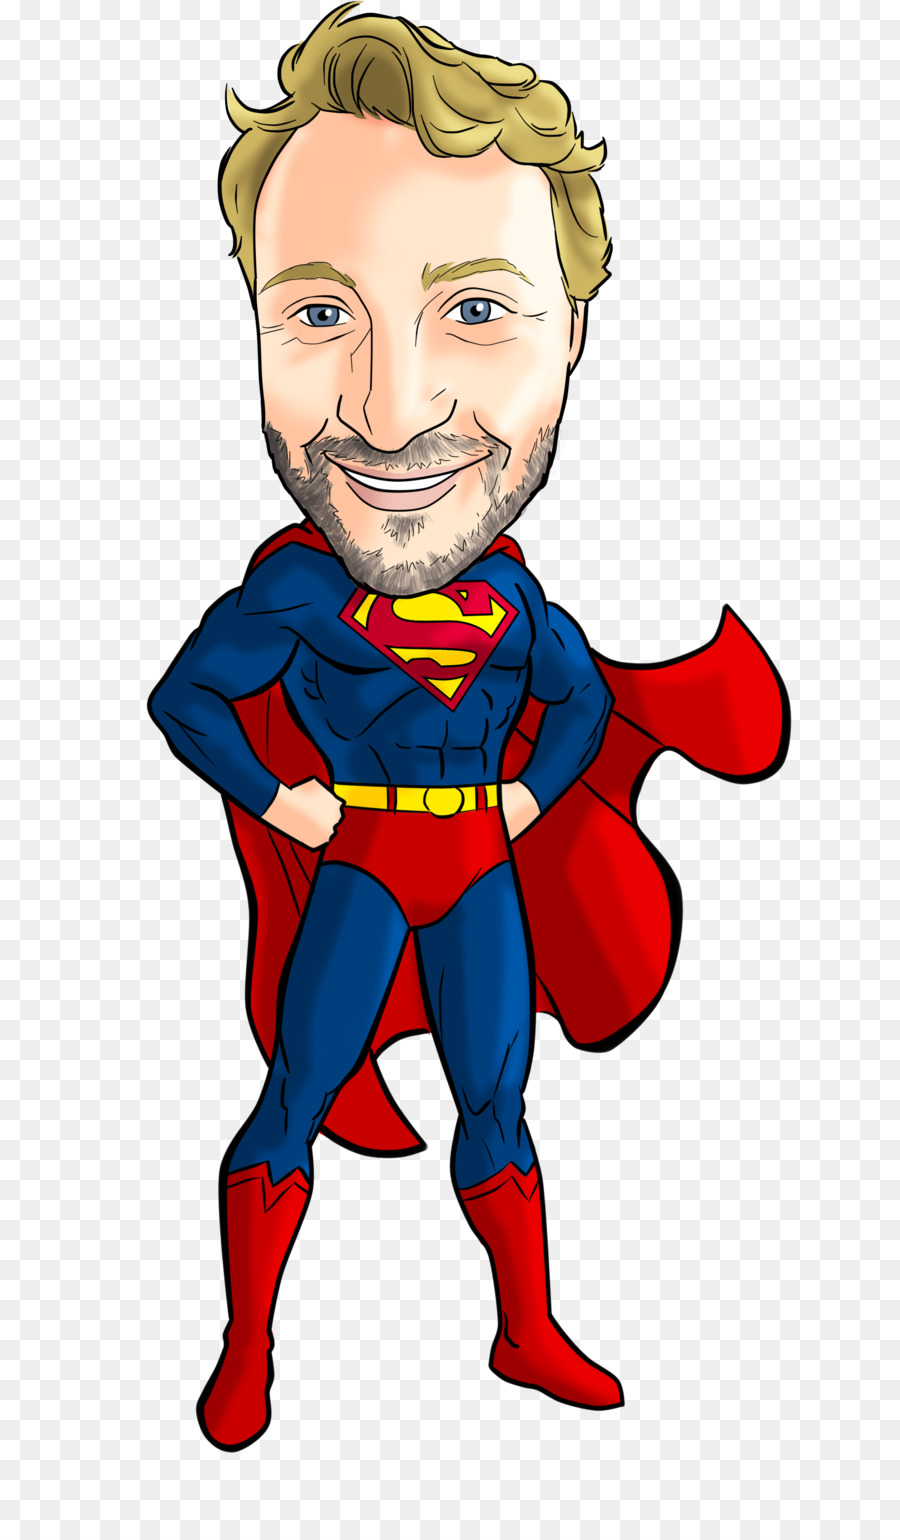 Superman Superhero Caricature Cartoon YouTube - superman png download - 1798*3058 - Free Transparent Superman png Download.